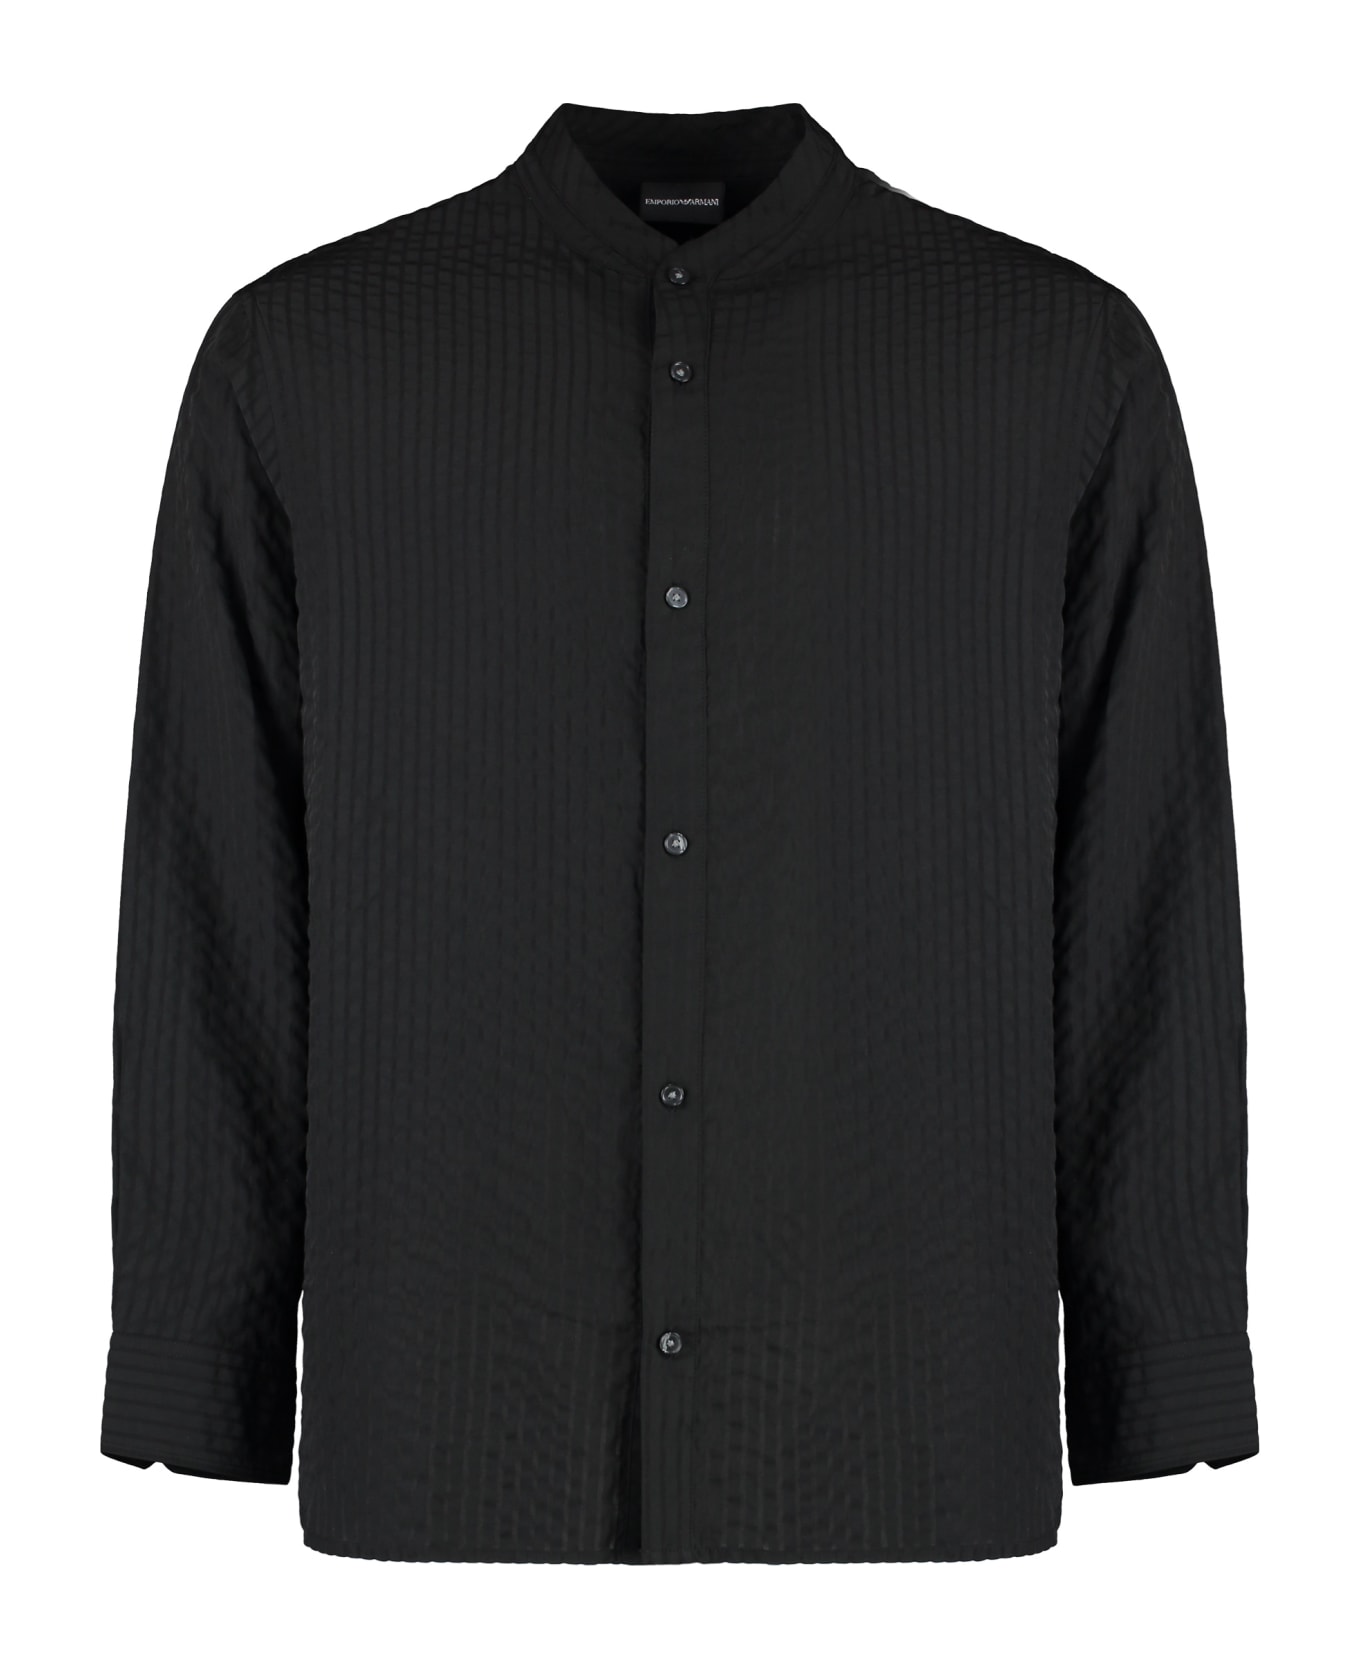 Emporio Armani Technical Fabric Shirt - black シャツ